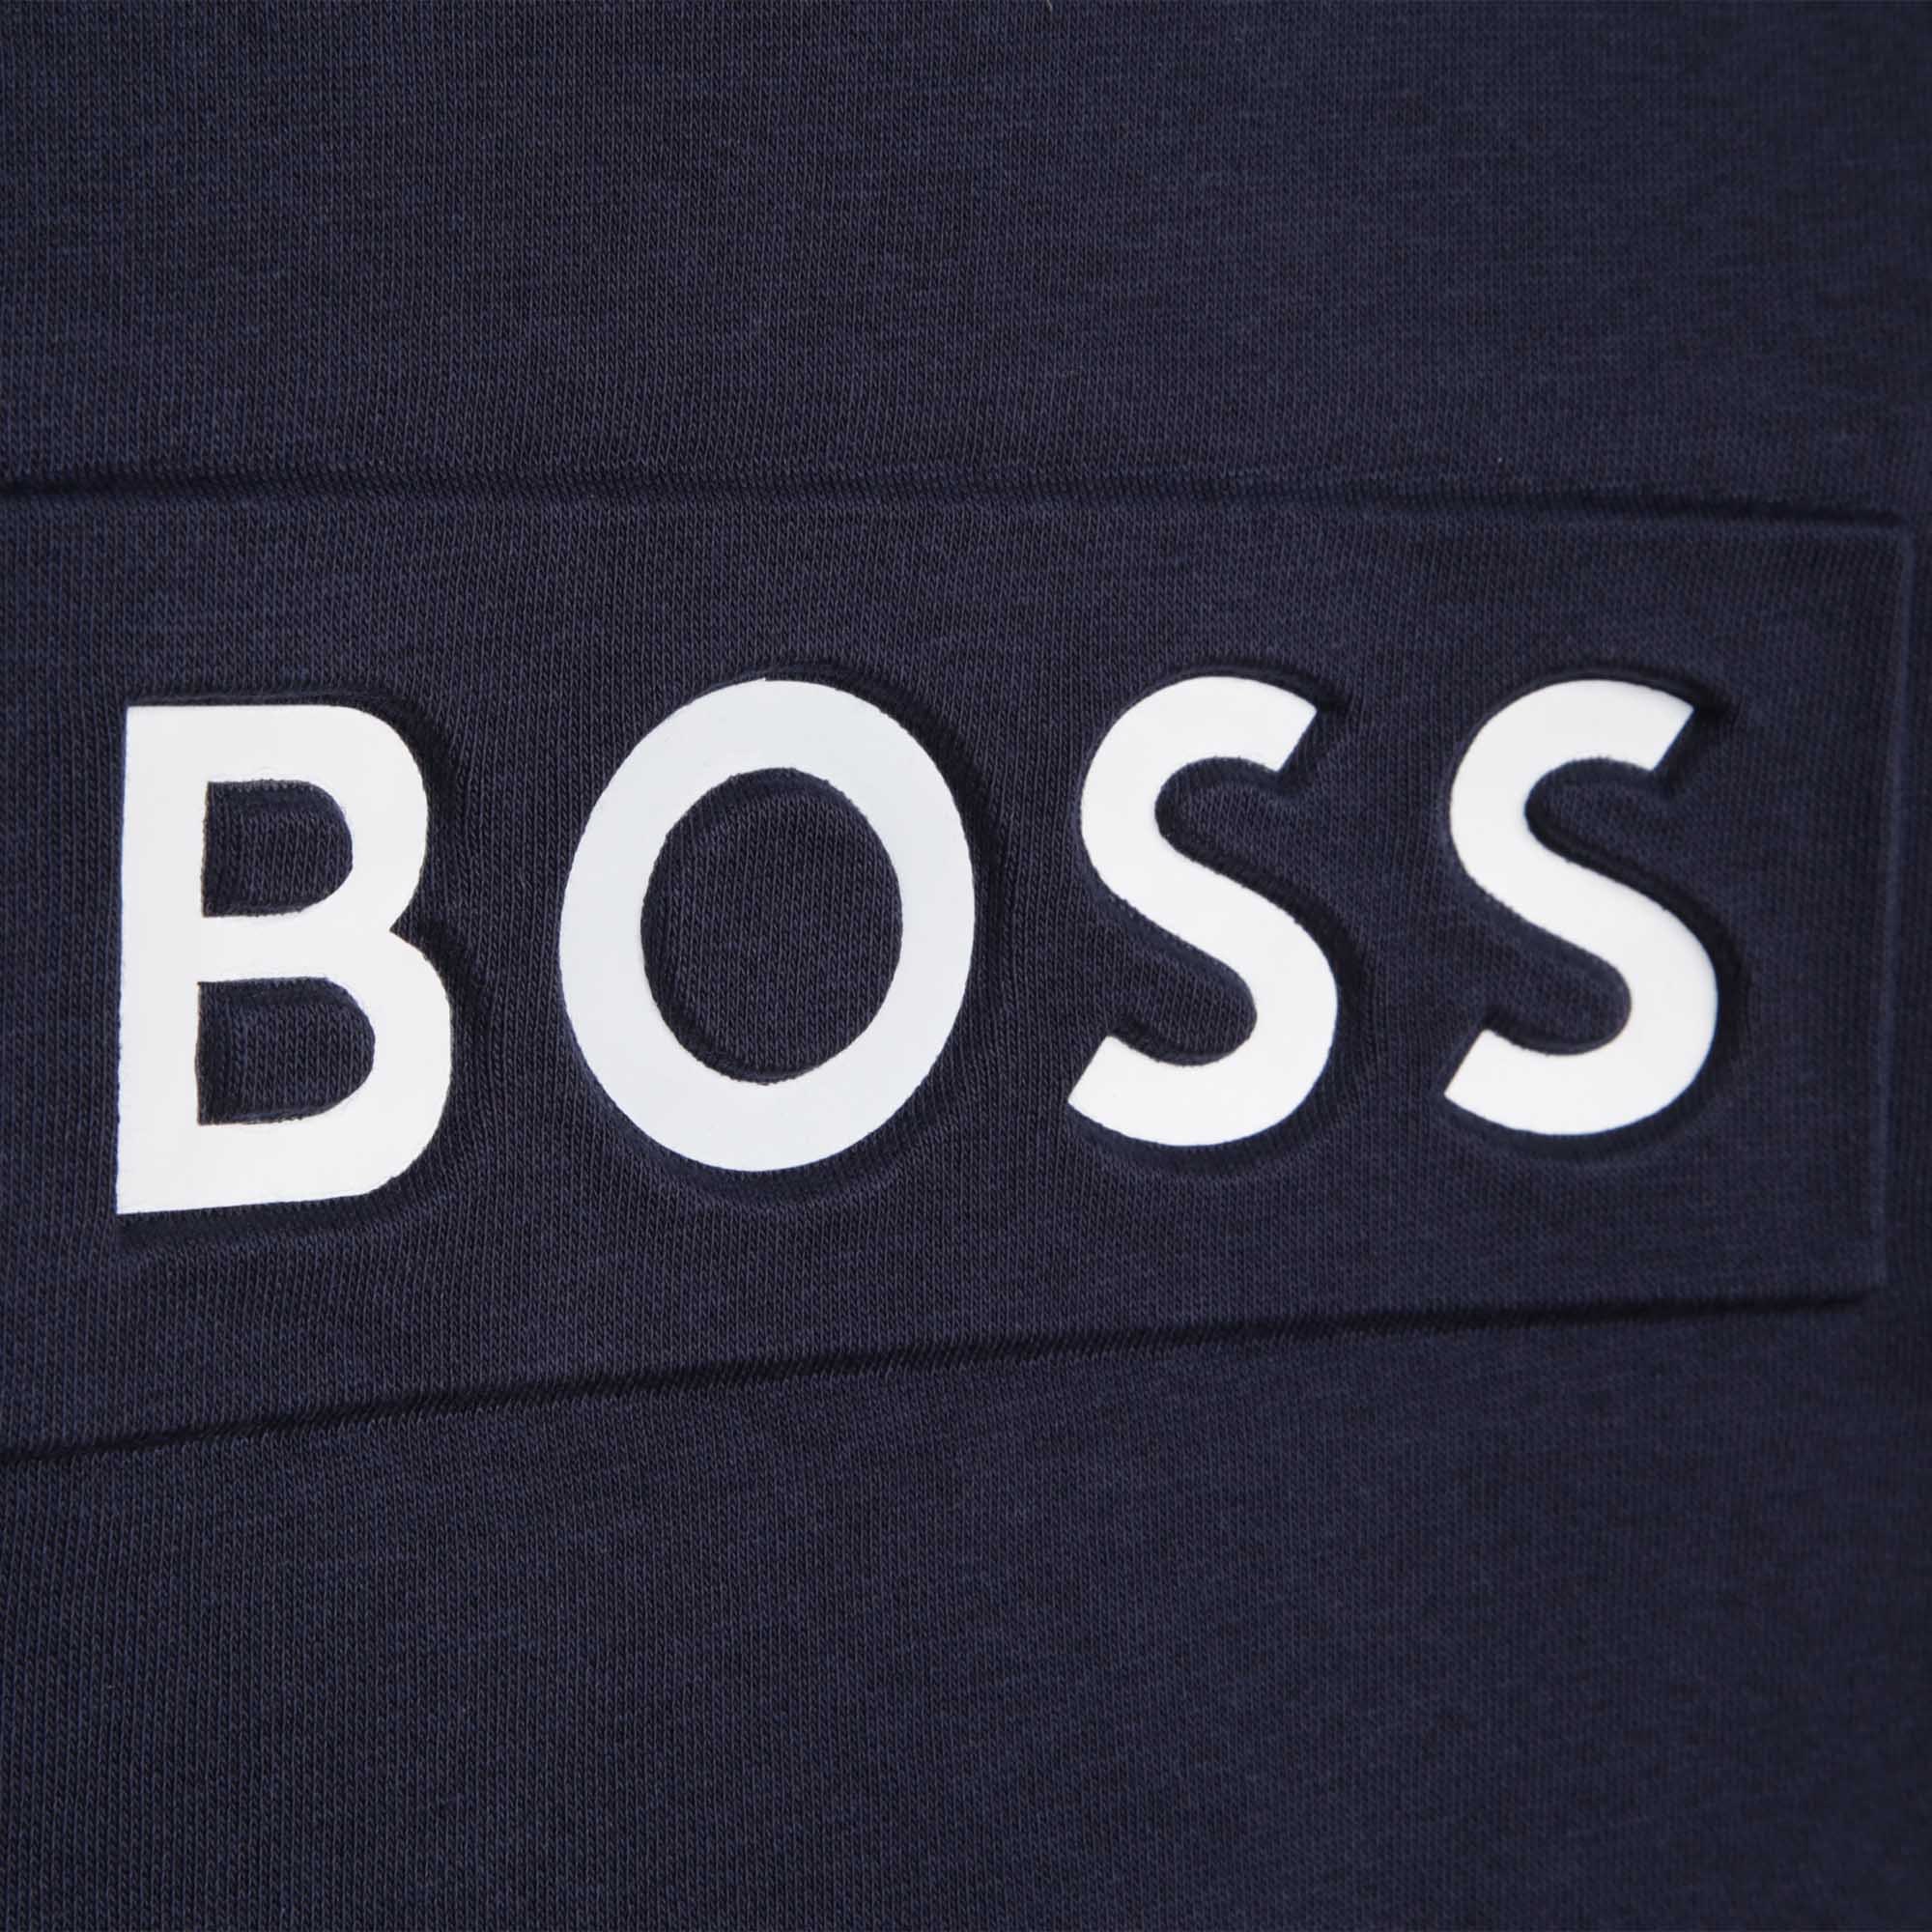 Hugo Boss Baby Embossed Logo Sweater Navy